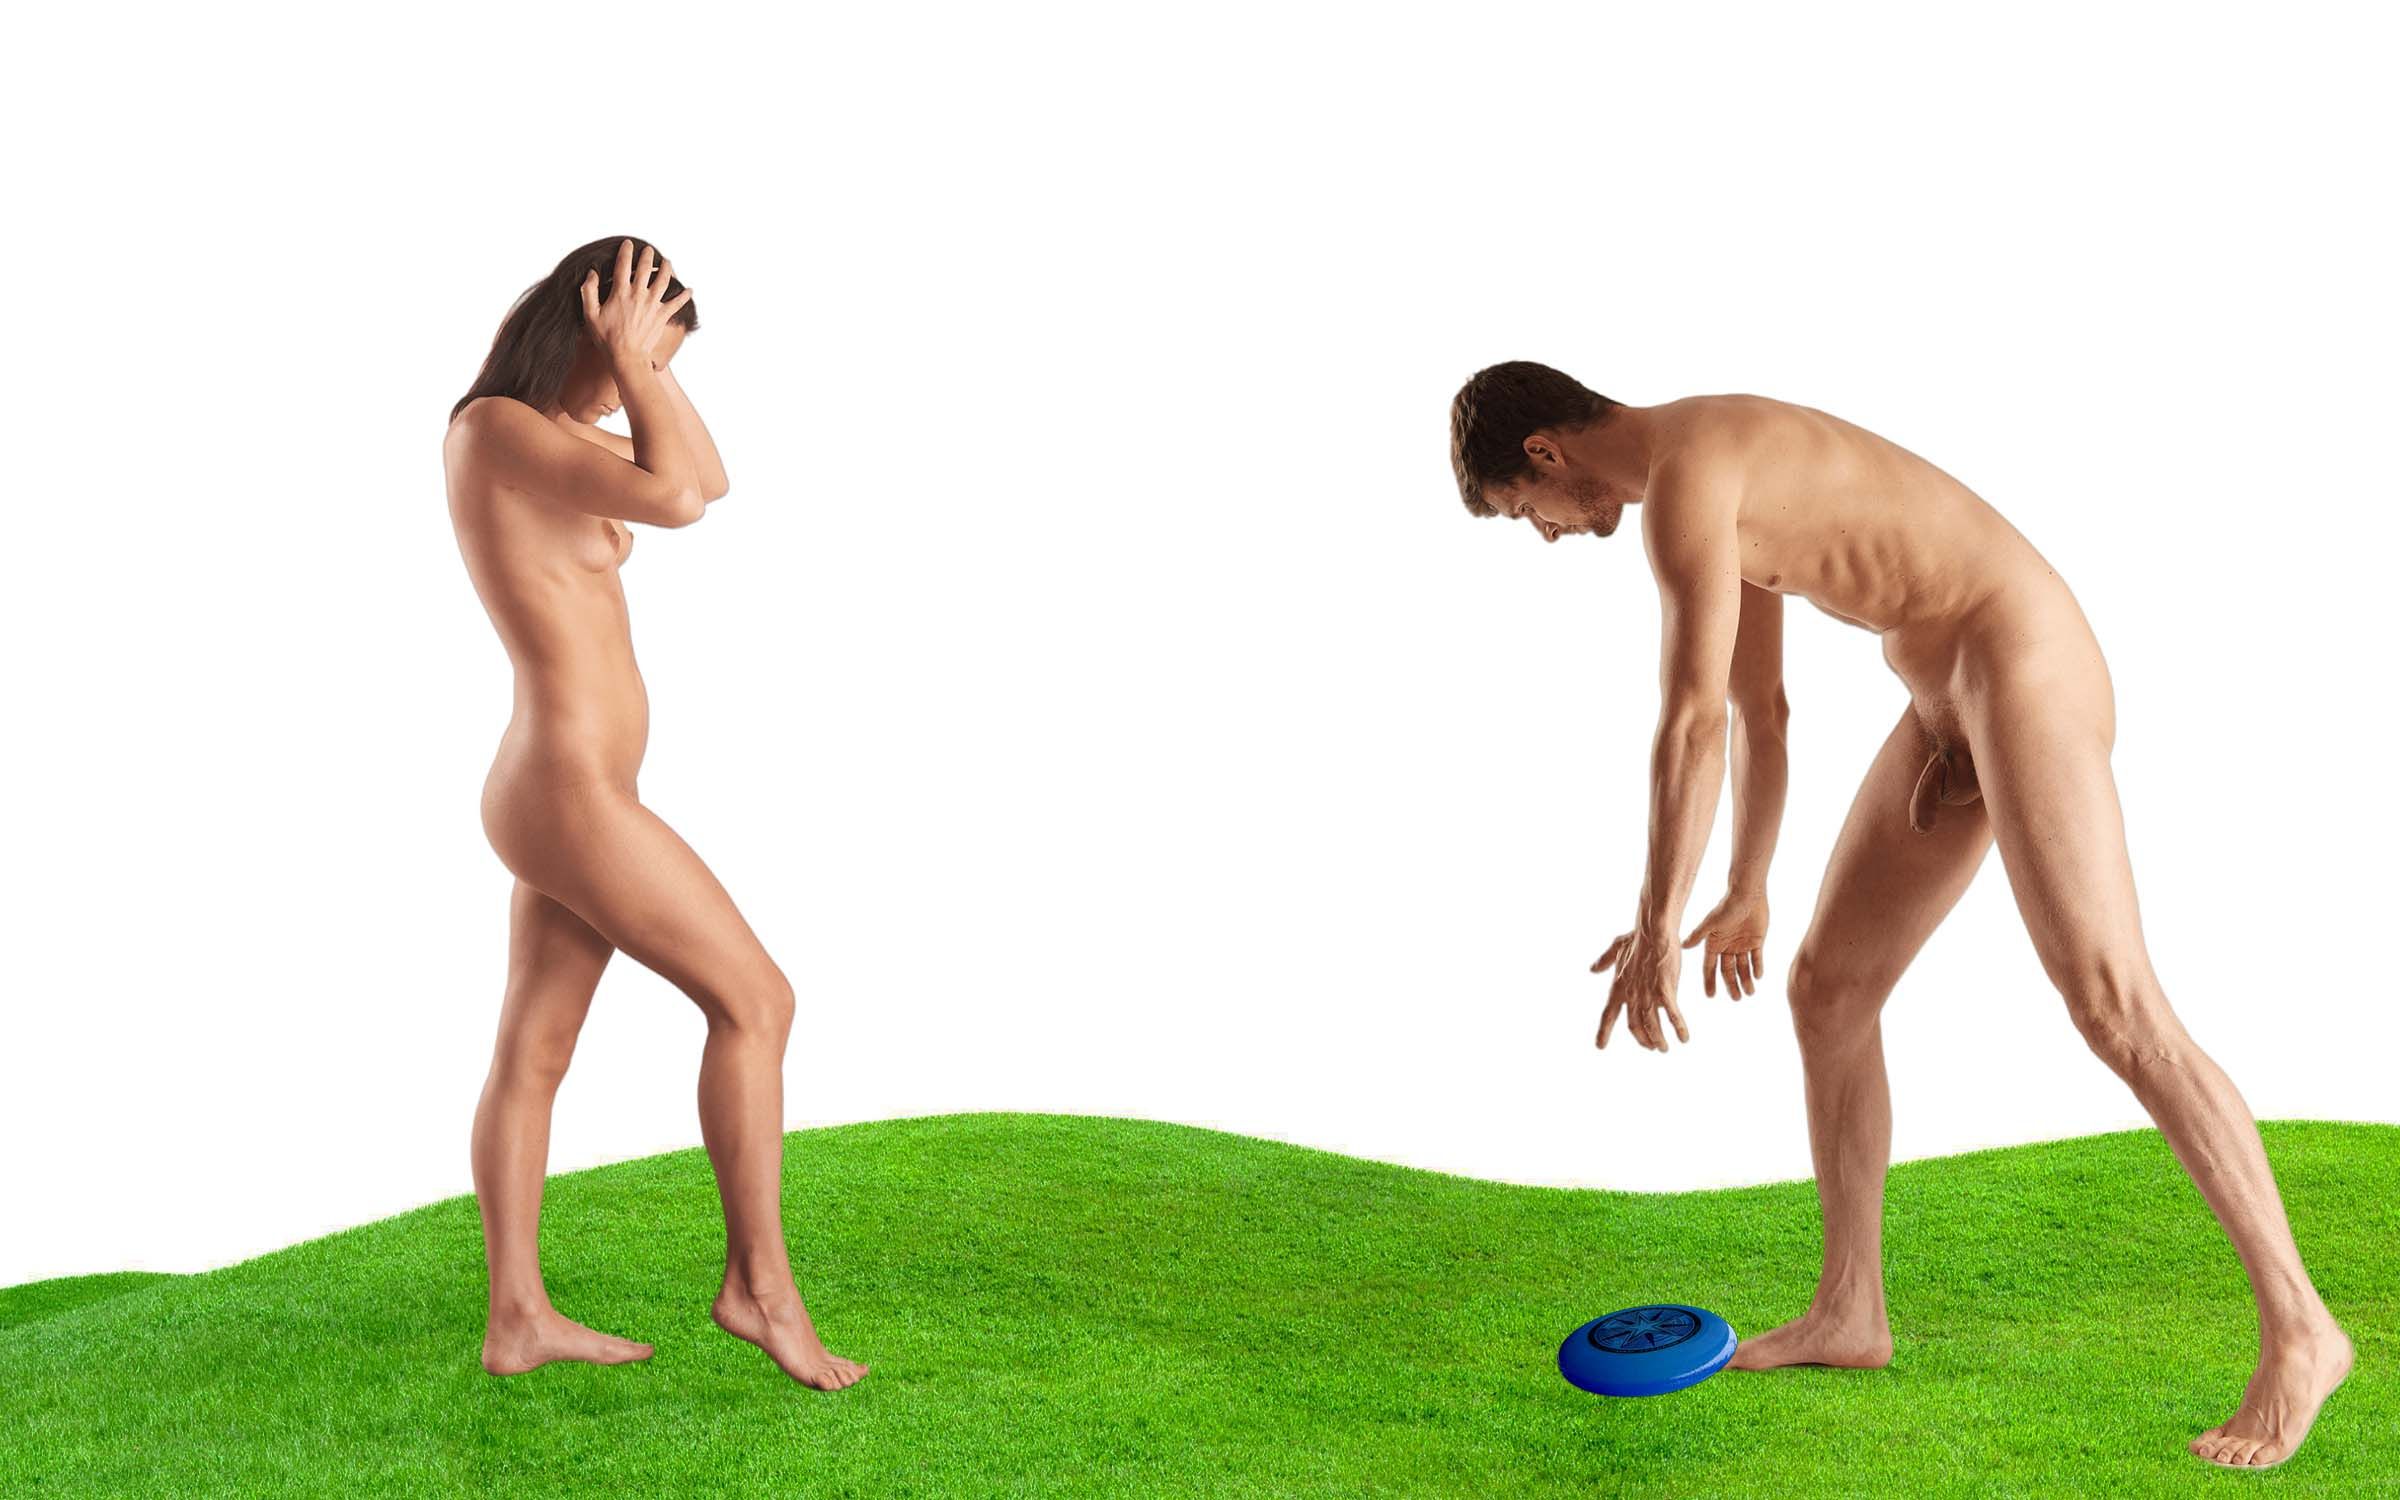 Embracing Nudity in Coed Nude Frisbee